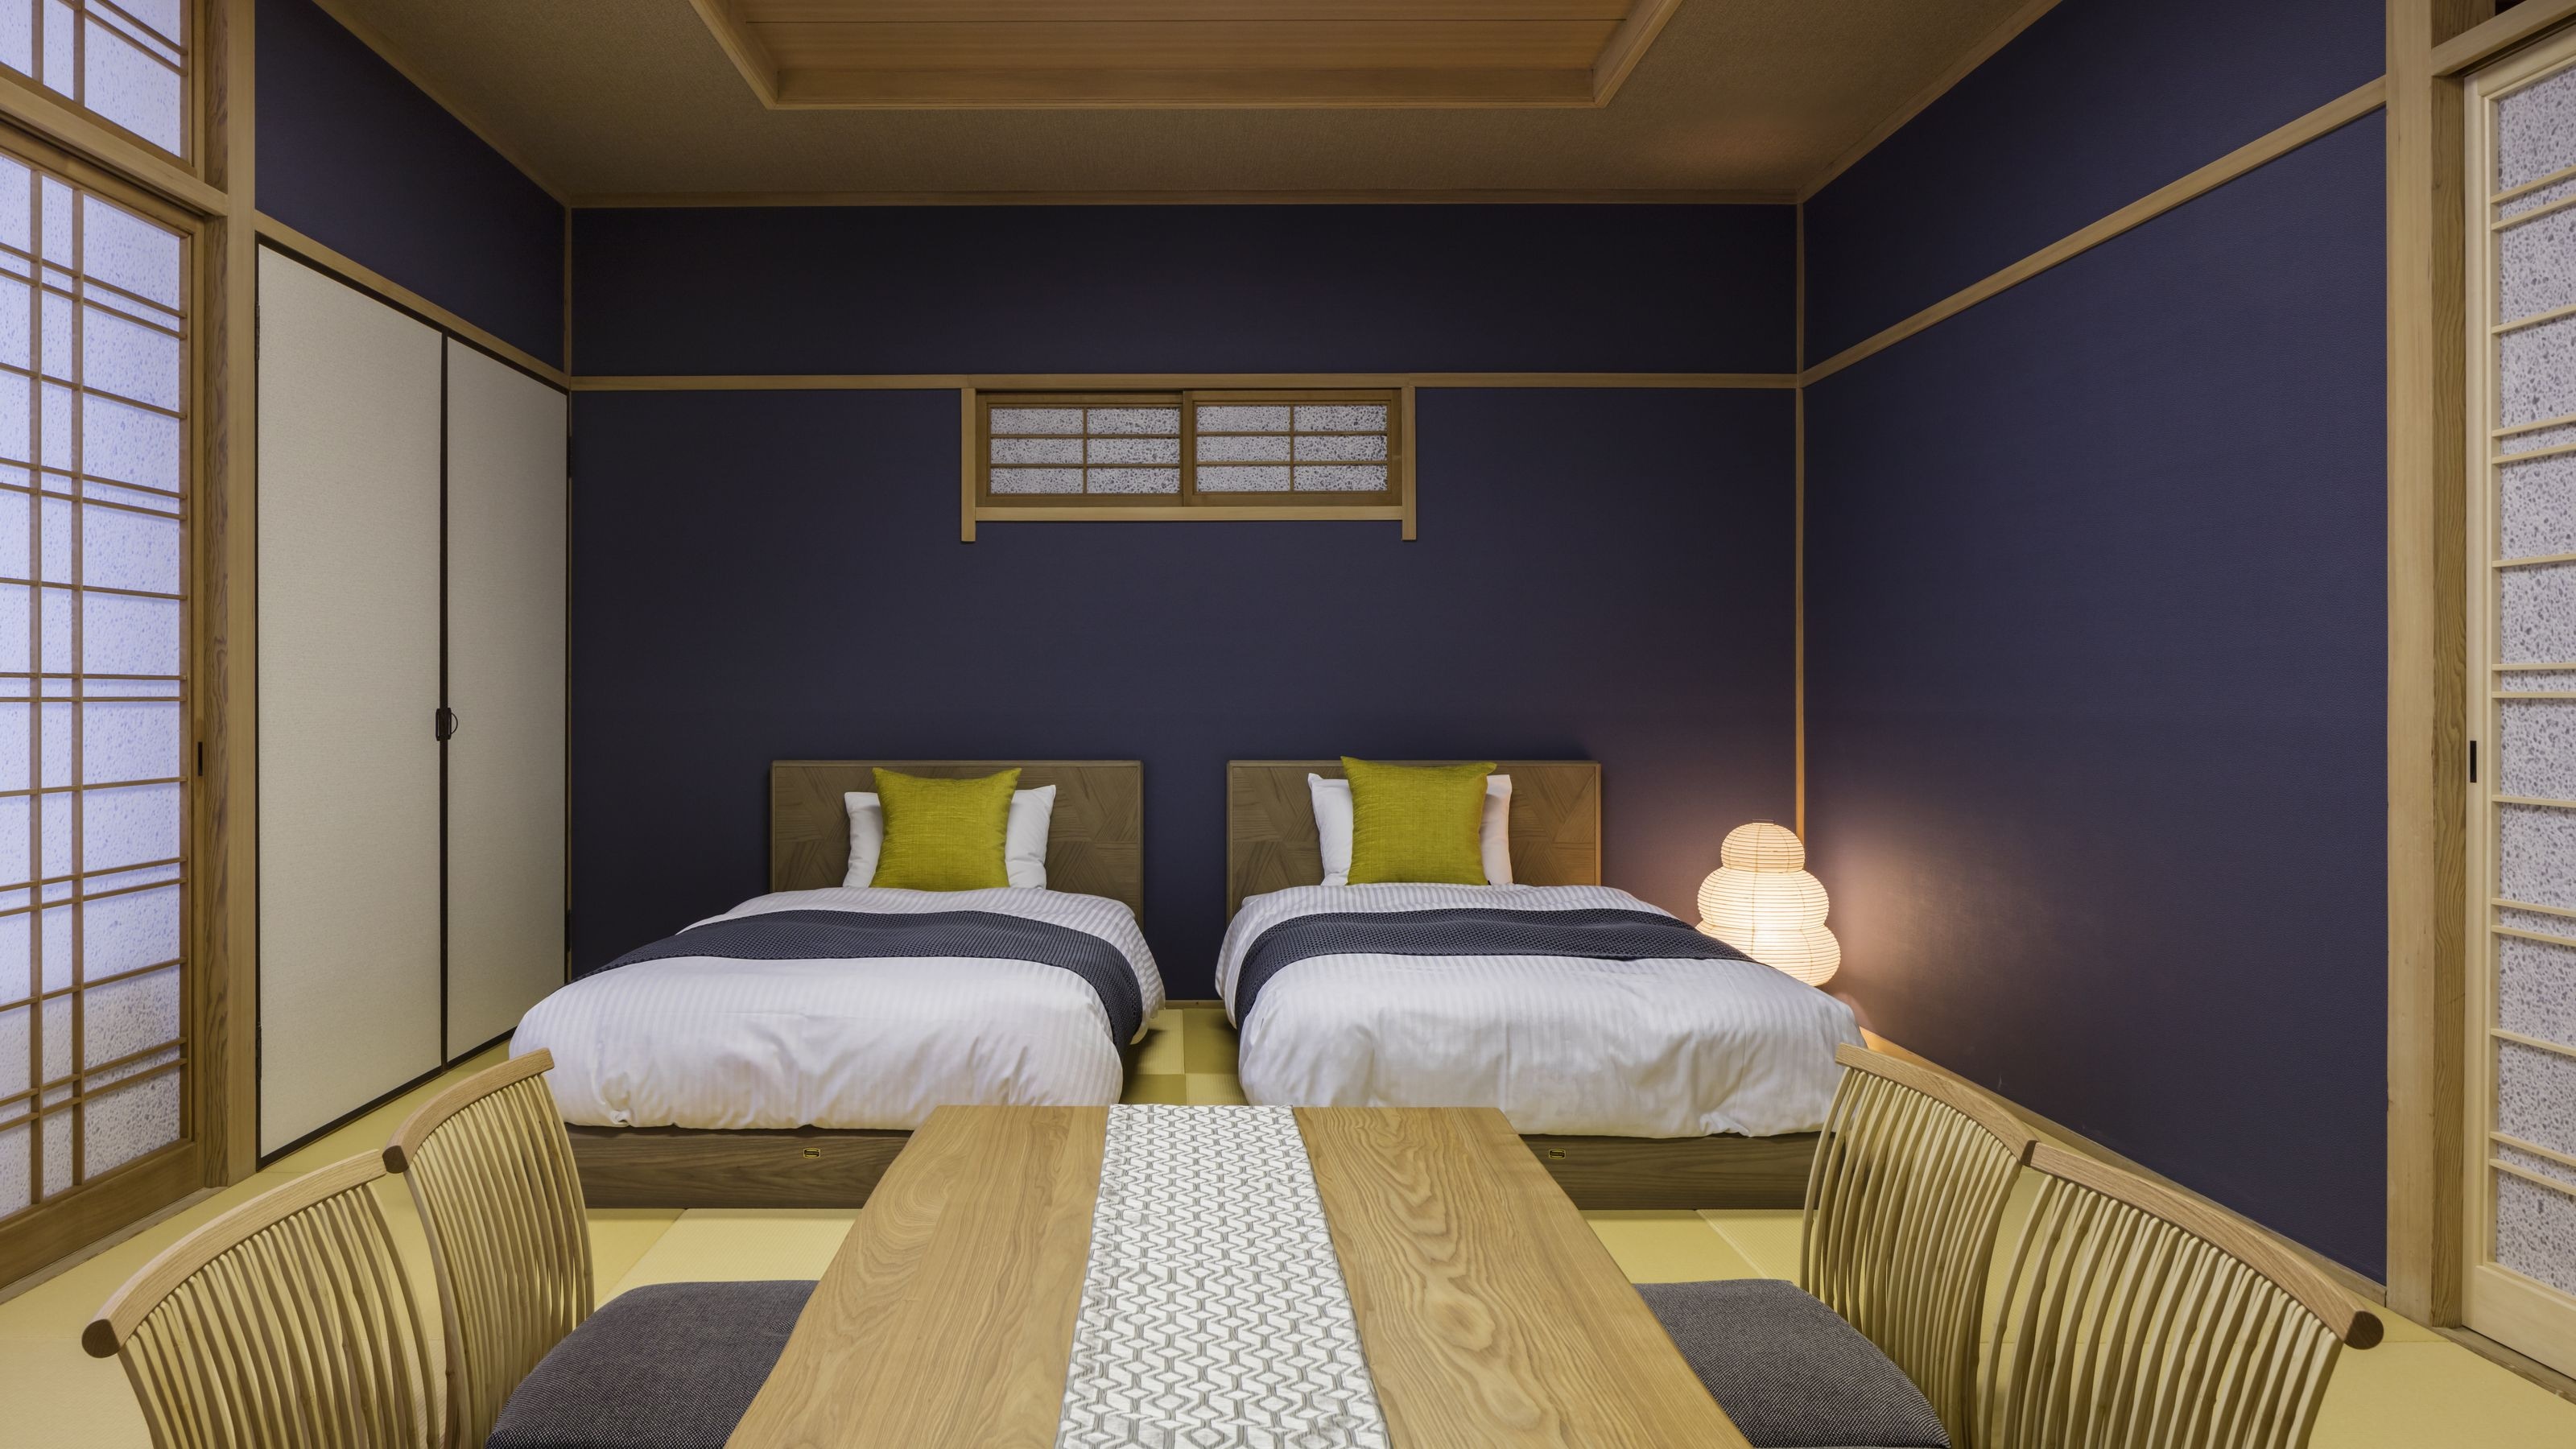 DX 日式房间图片 ◆ 两张单人床 ◆ 房间宽敞。